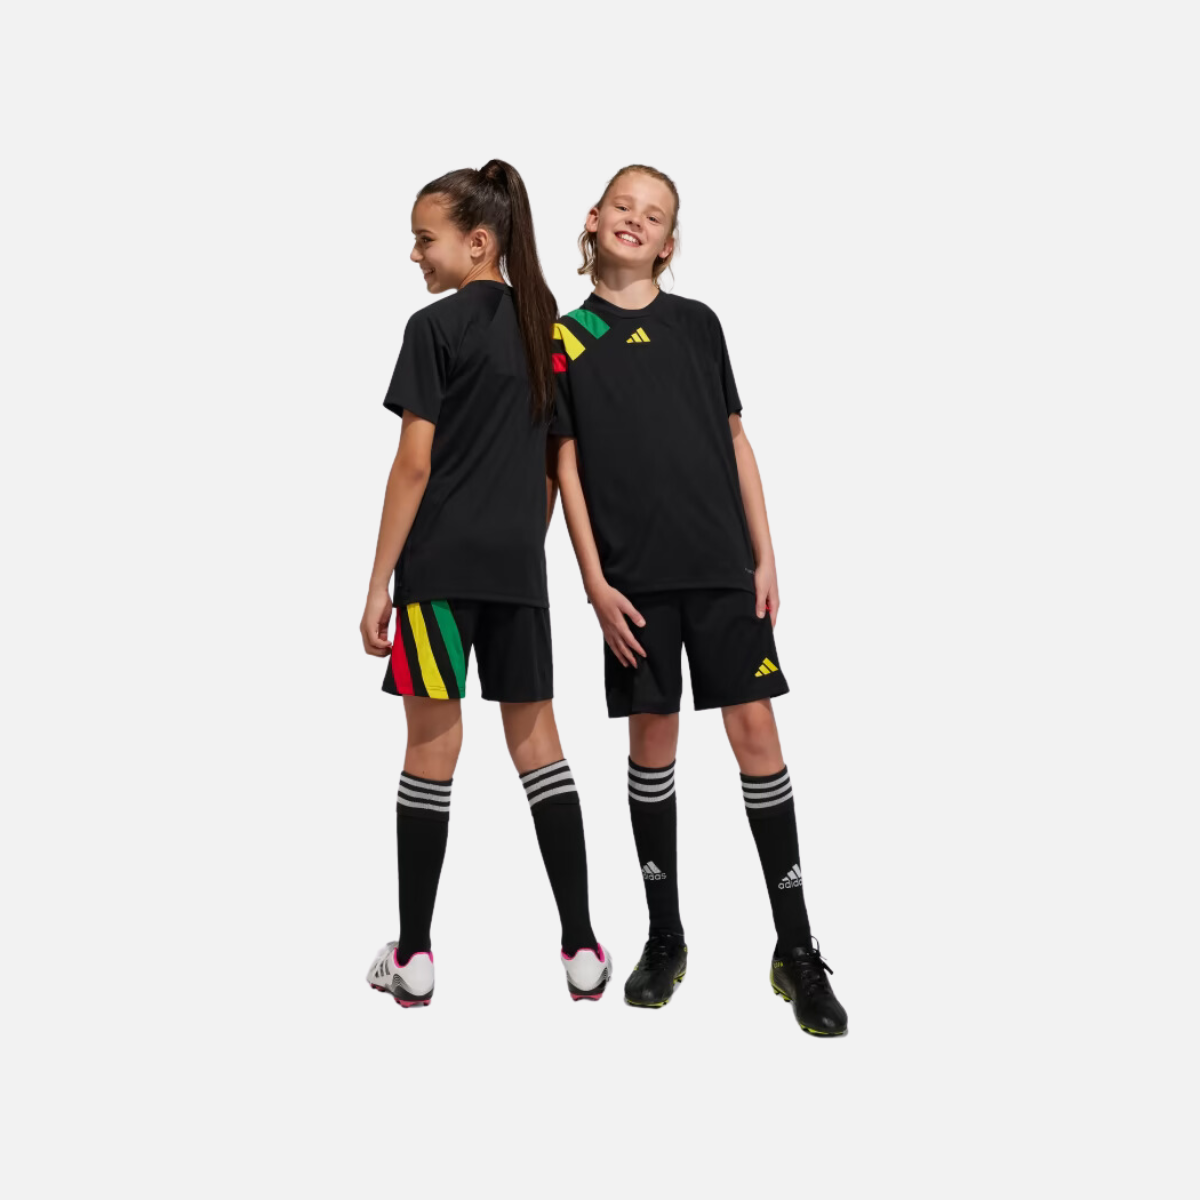 Adidas Fortore 23 Kids Unisex Shorts (5-16 Years) -Black/Team Collegiate Red/Team Yellow/Team Green